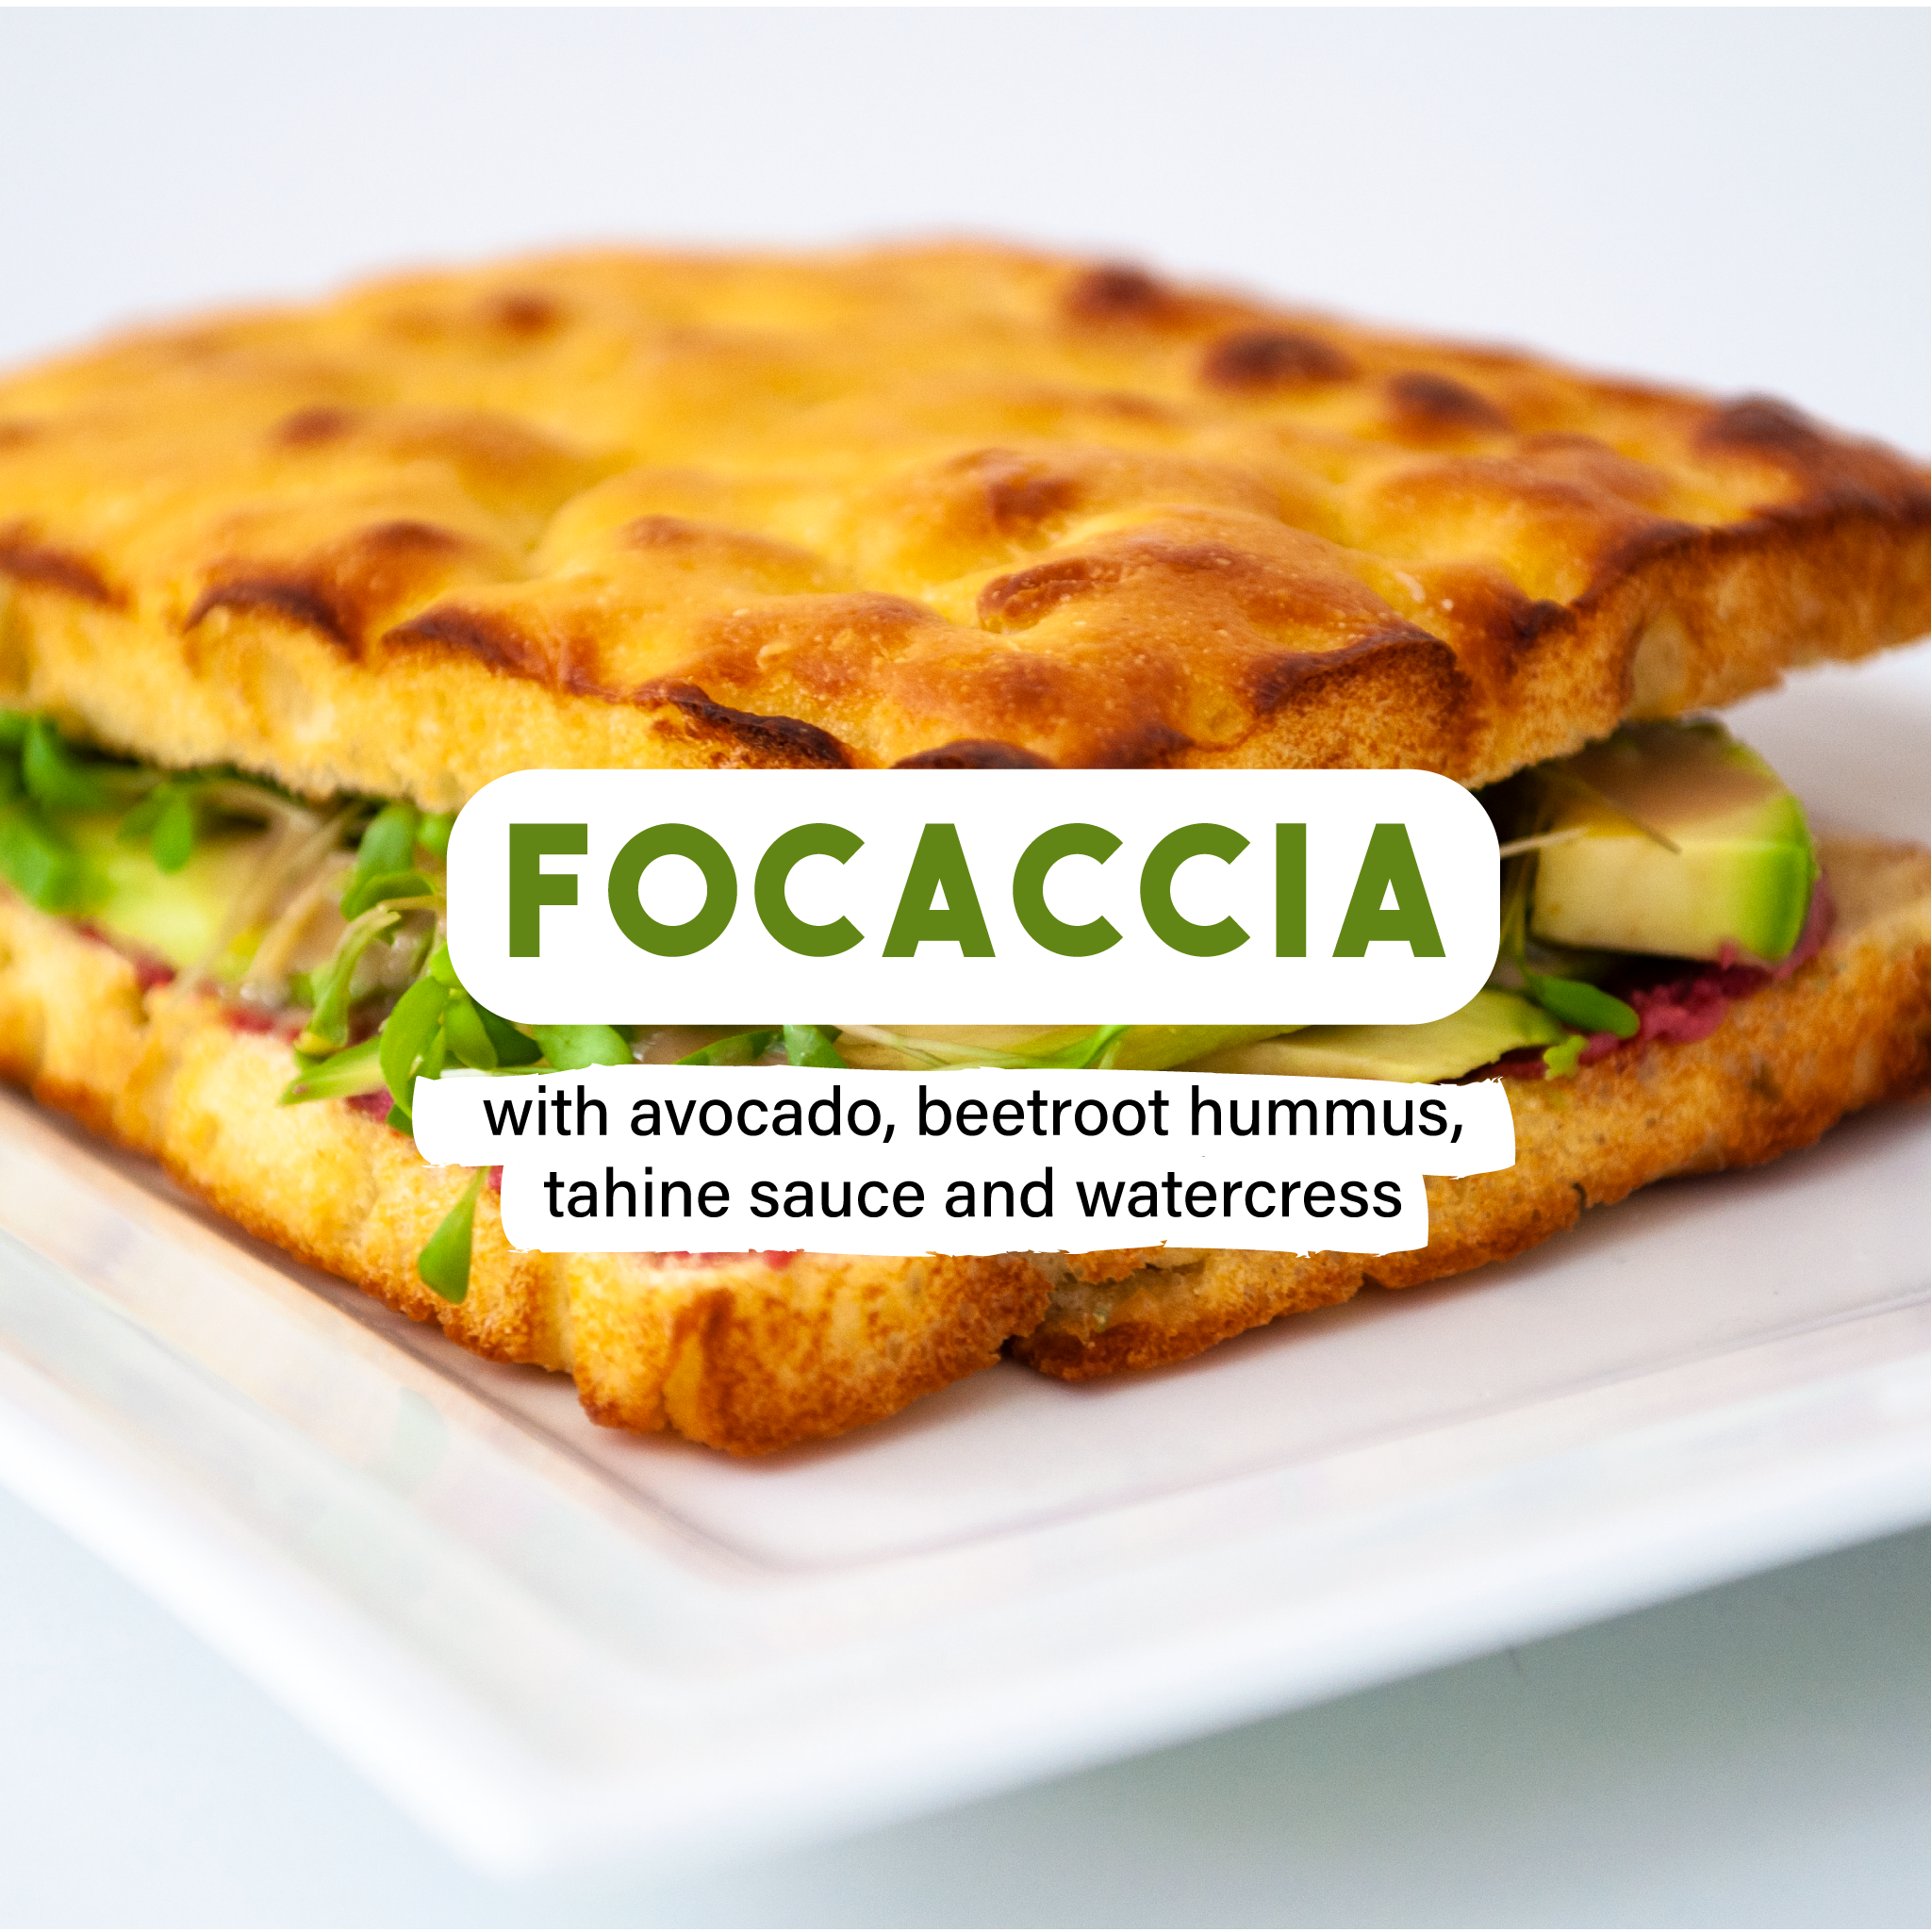 Focaccia with avocado, beetroot hummus, tahine sauce and watercress